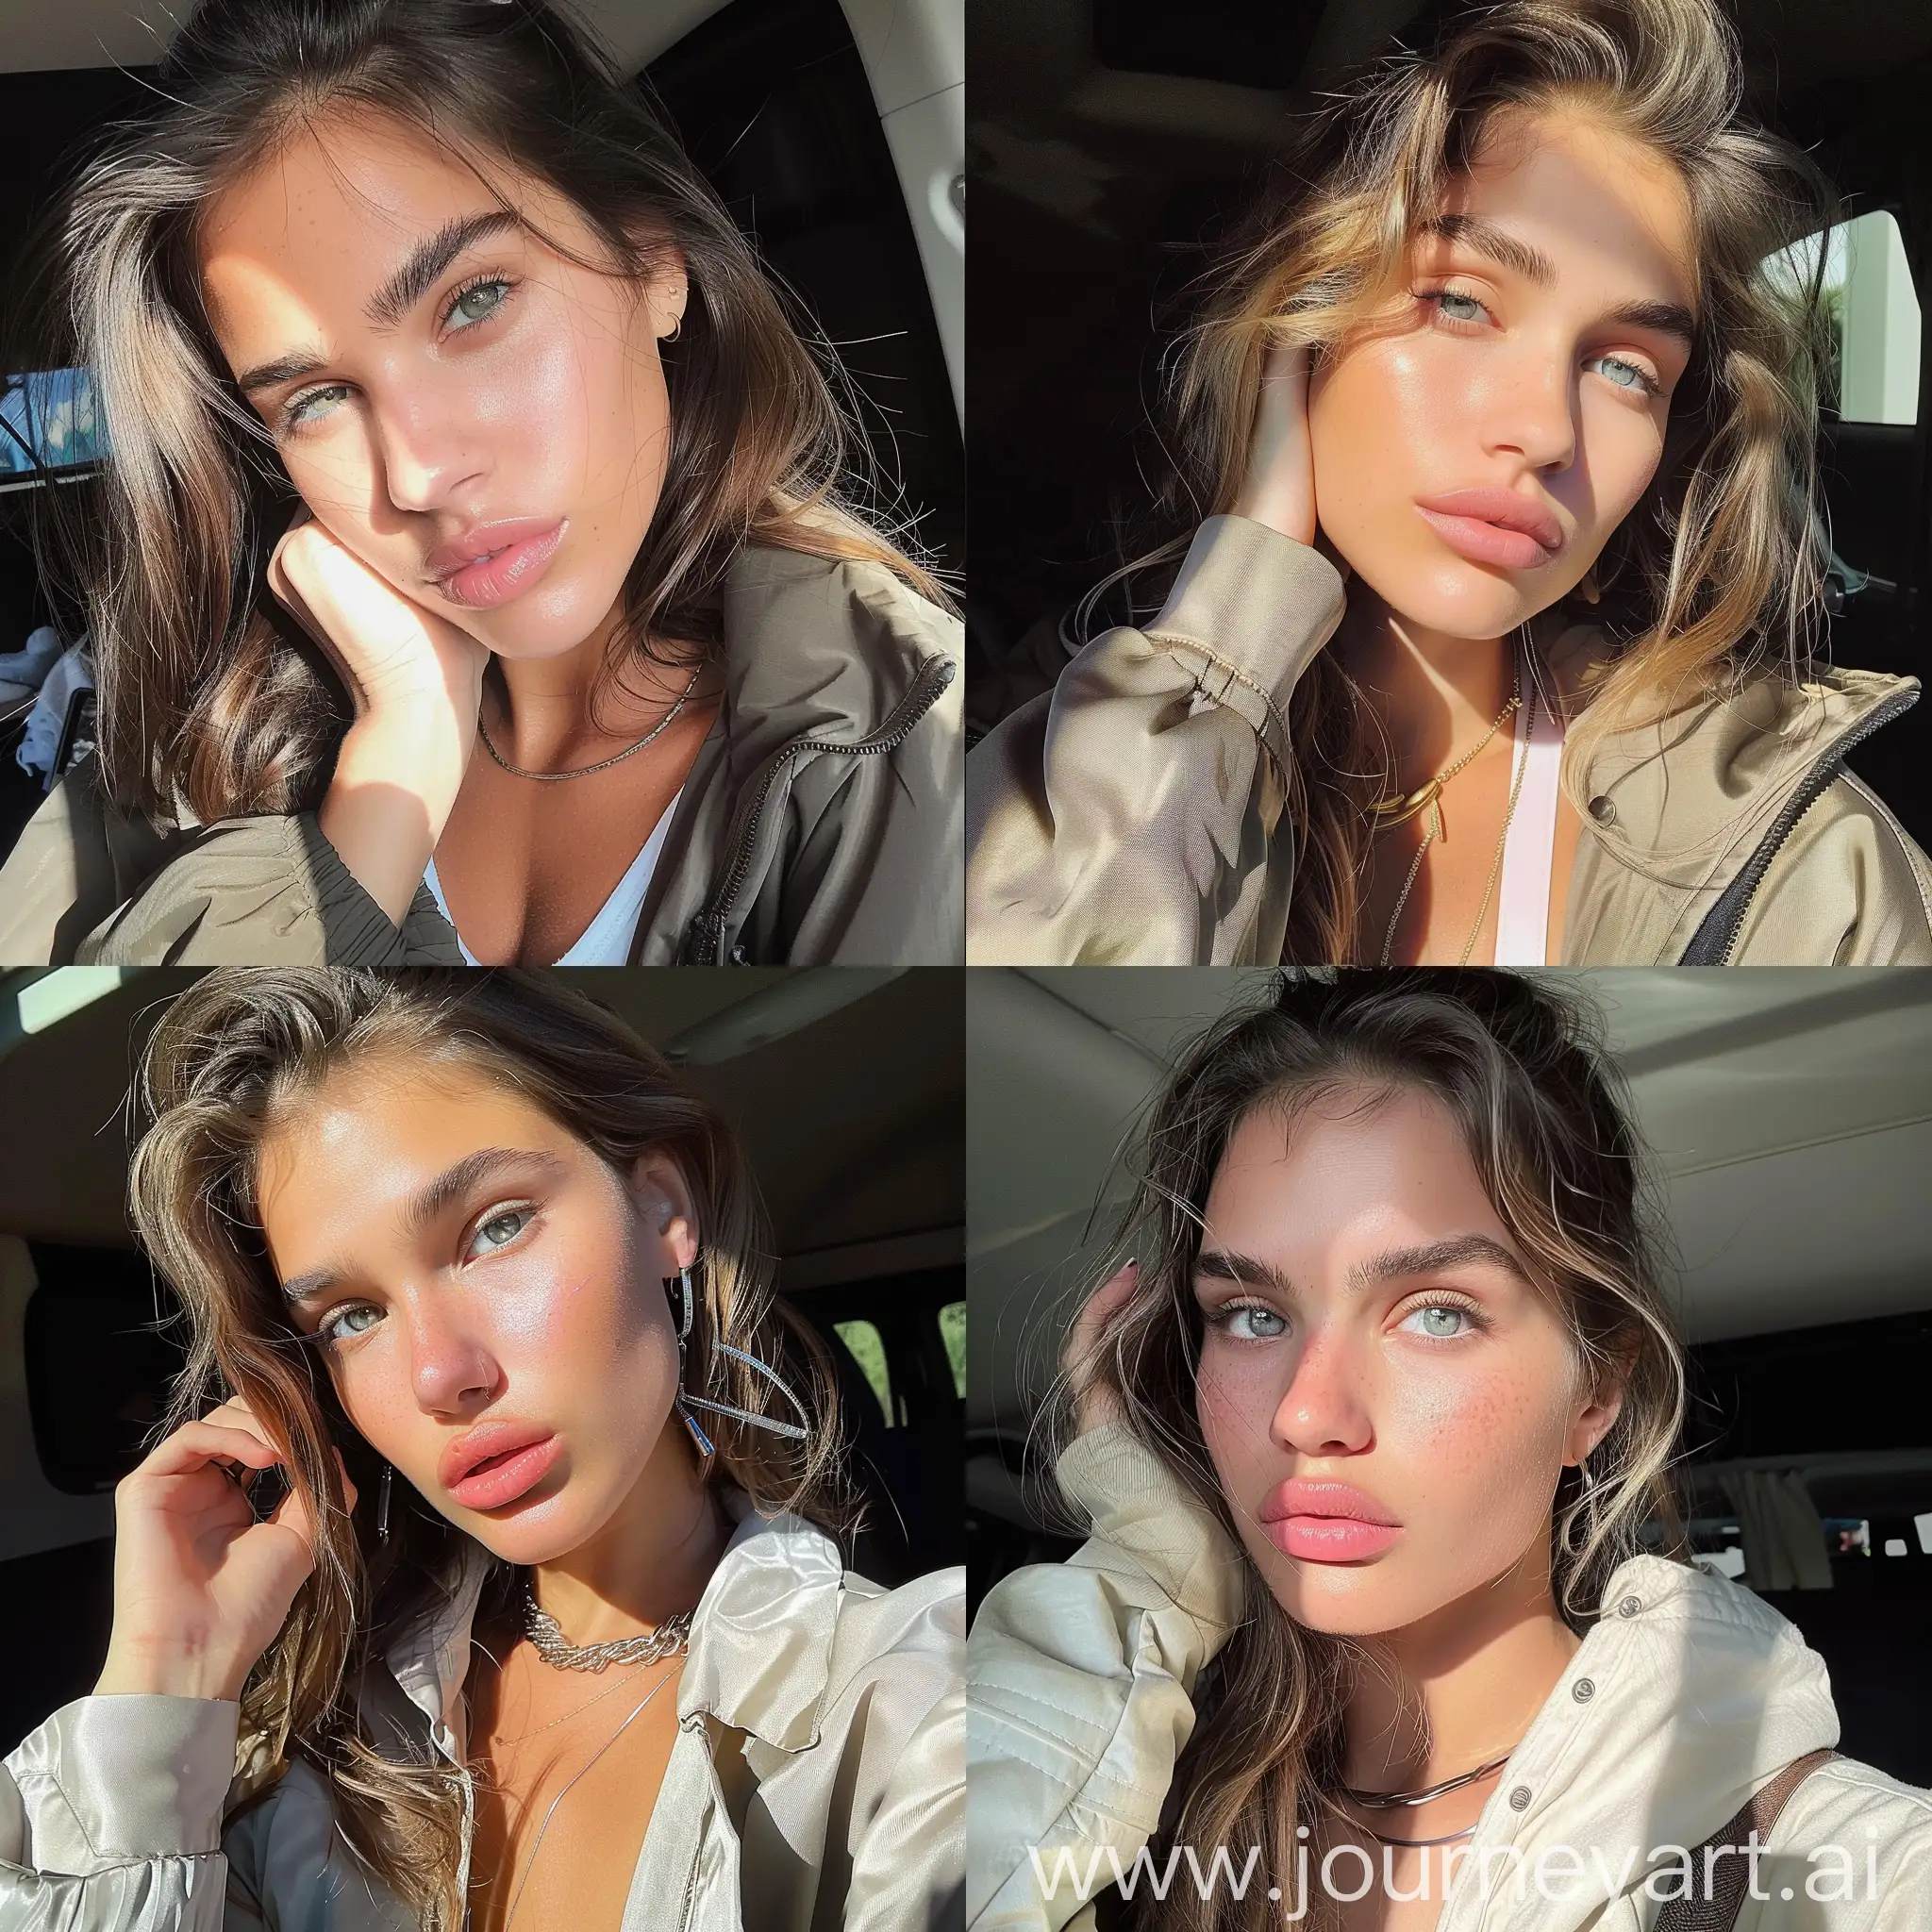 Instagram selfie of a super model girl